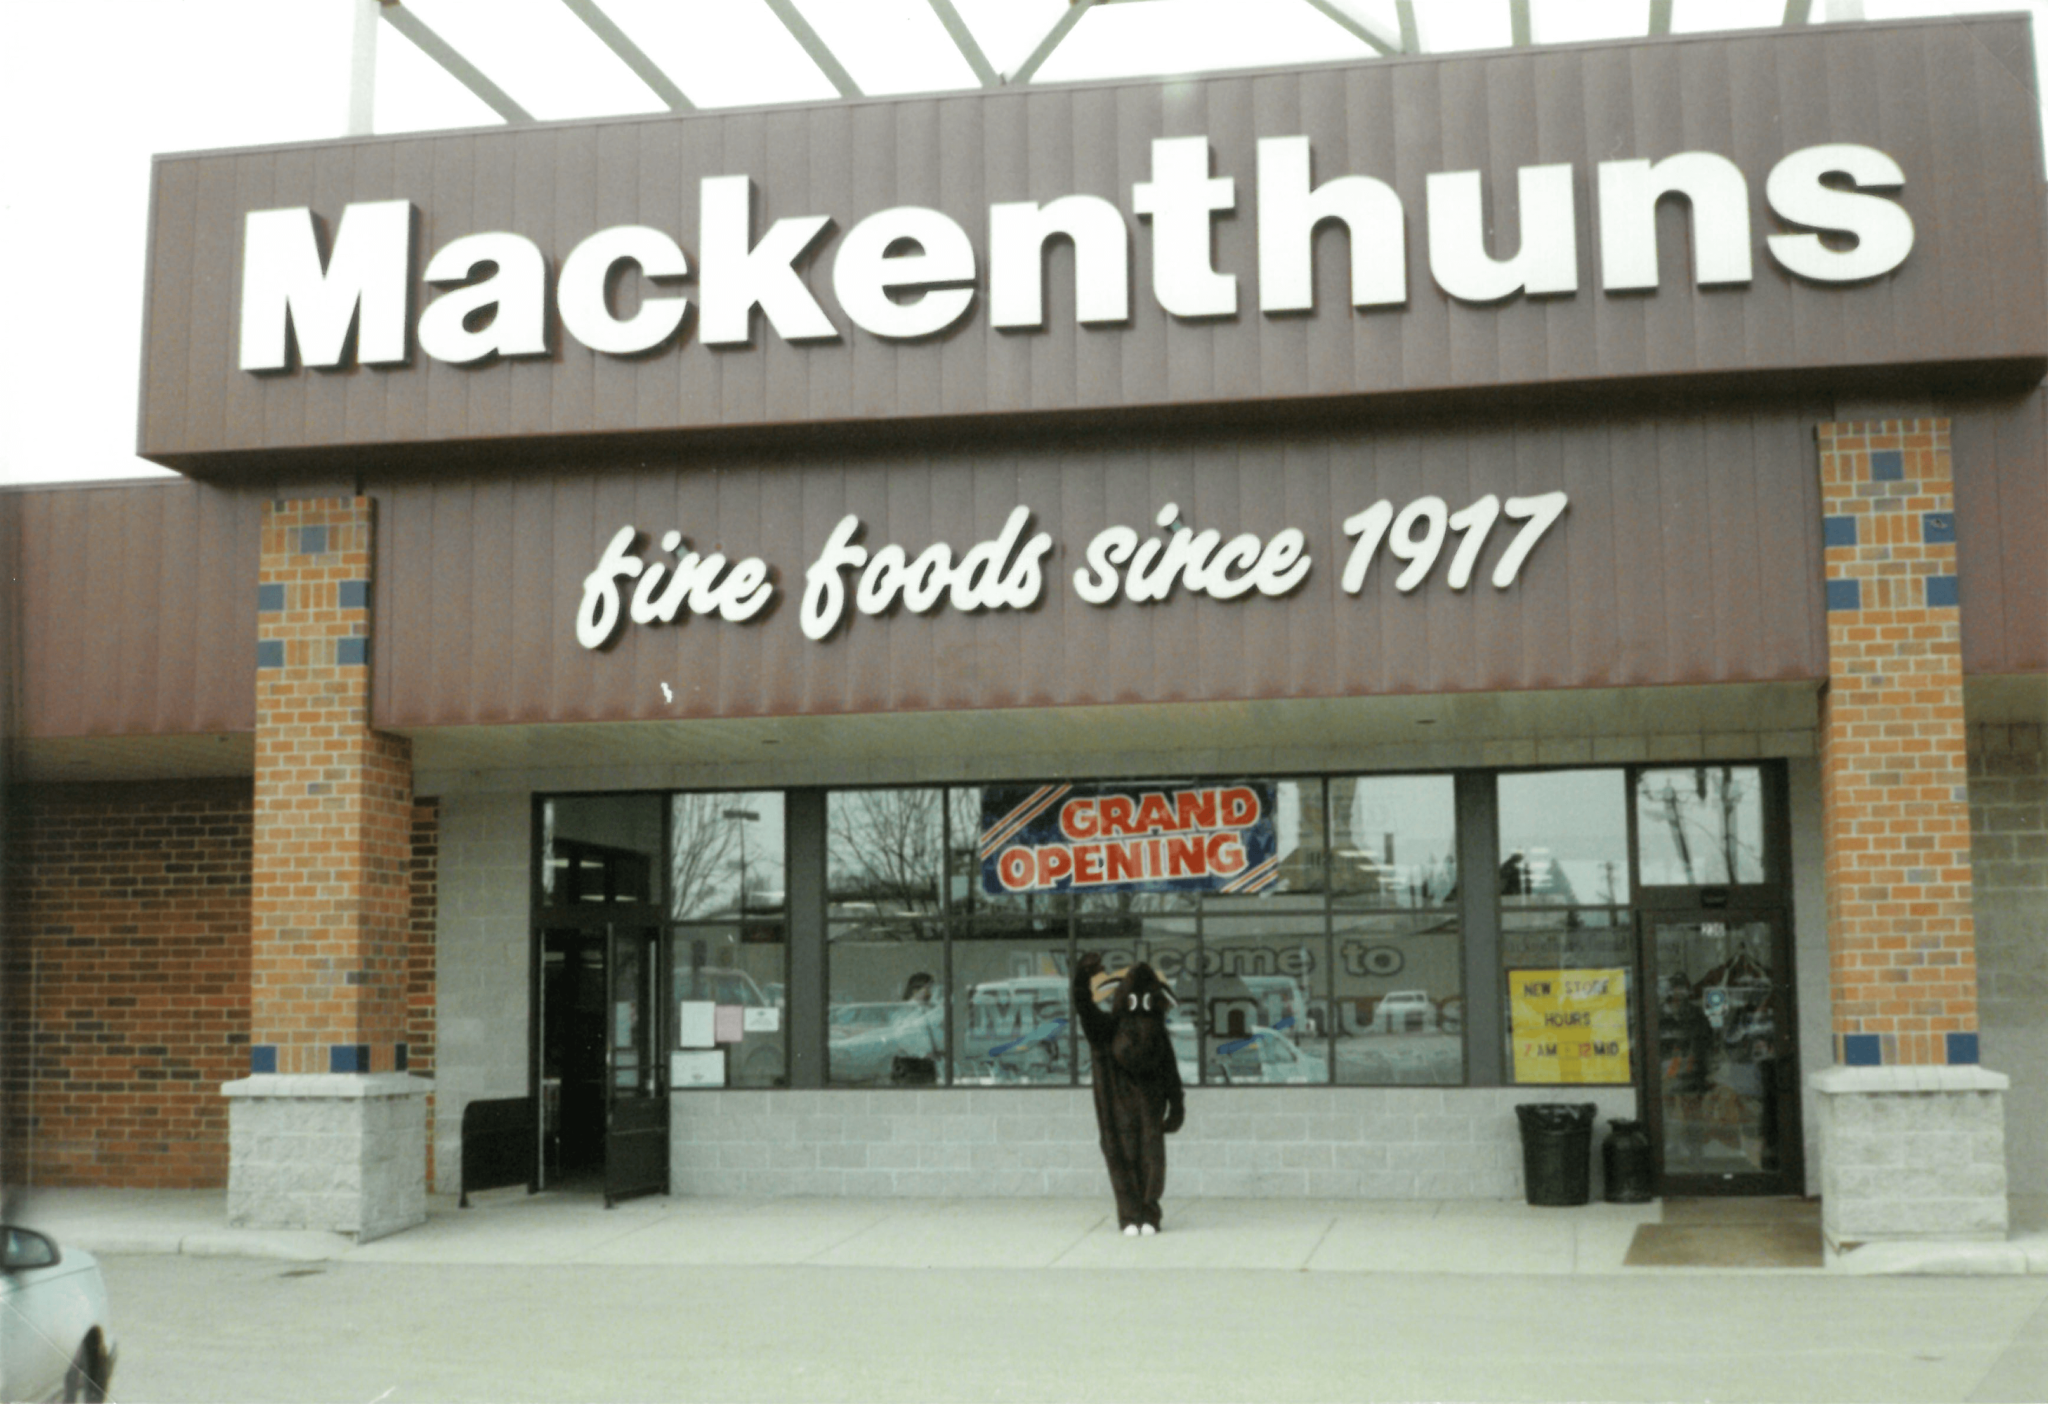 Grand Opening with Mackenthun's Mascot Mac the Moose